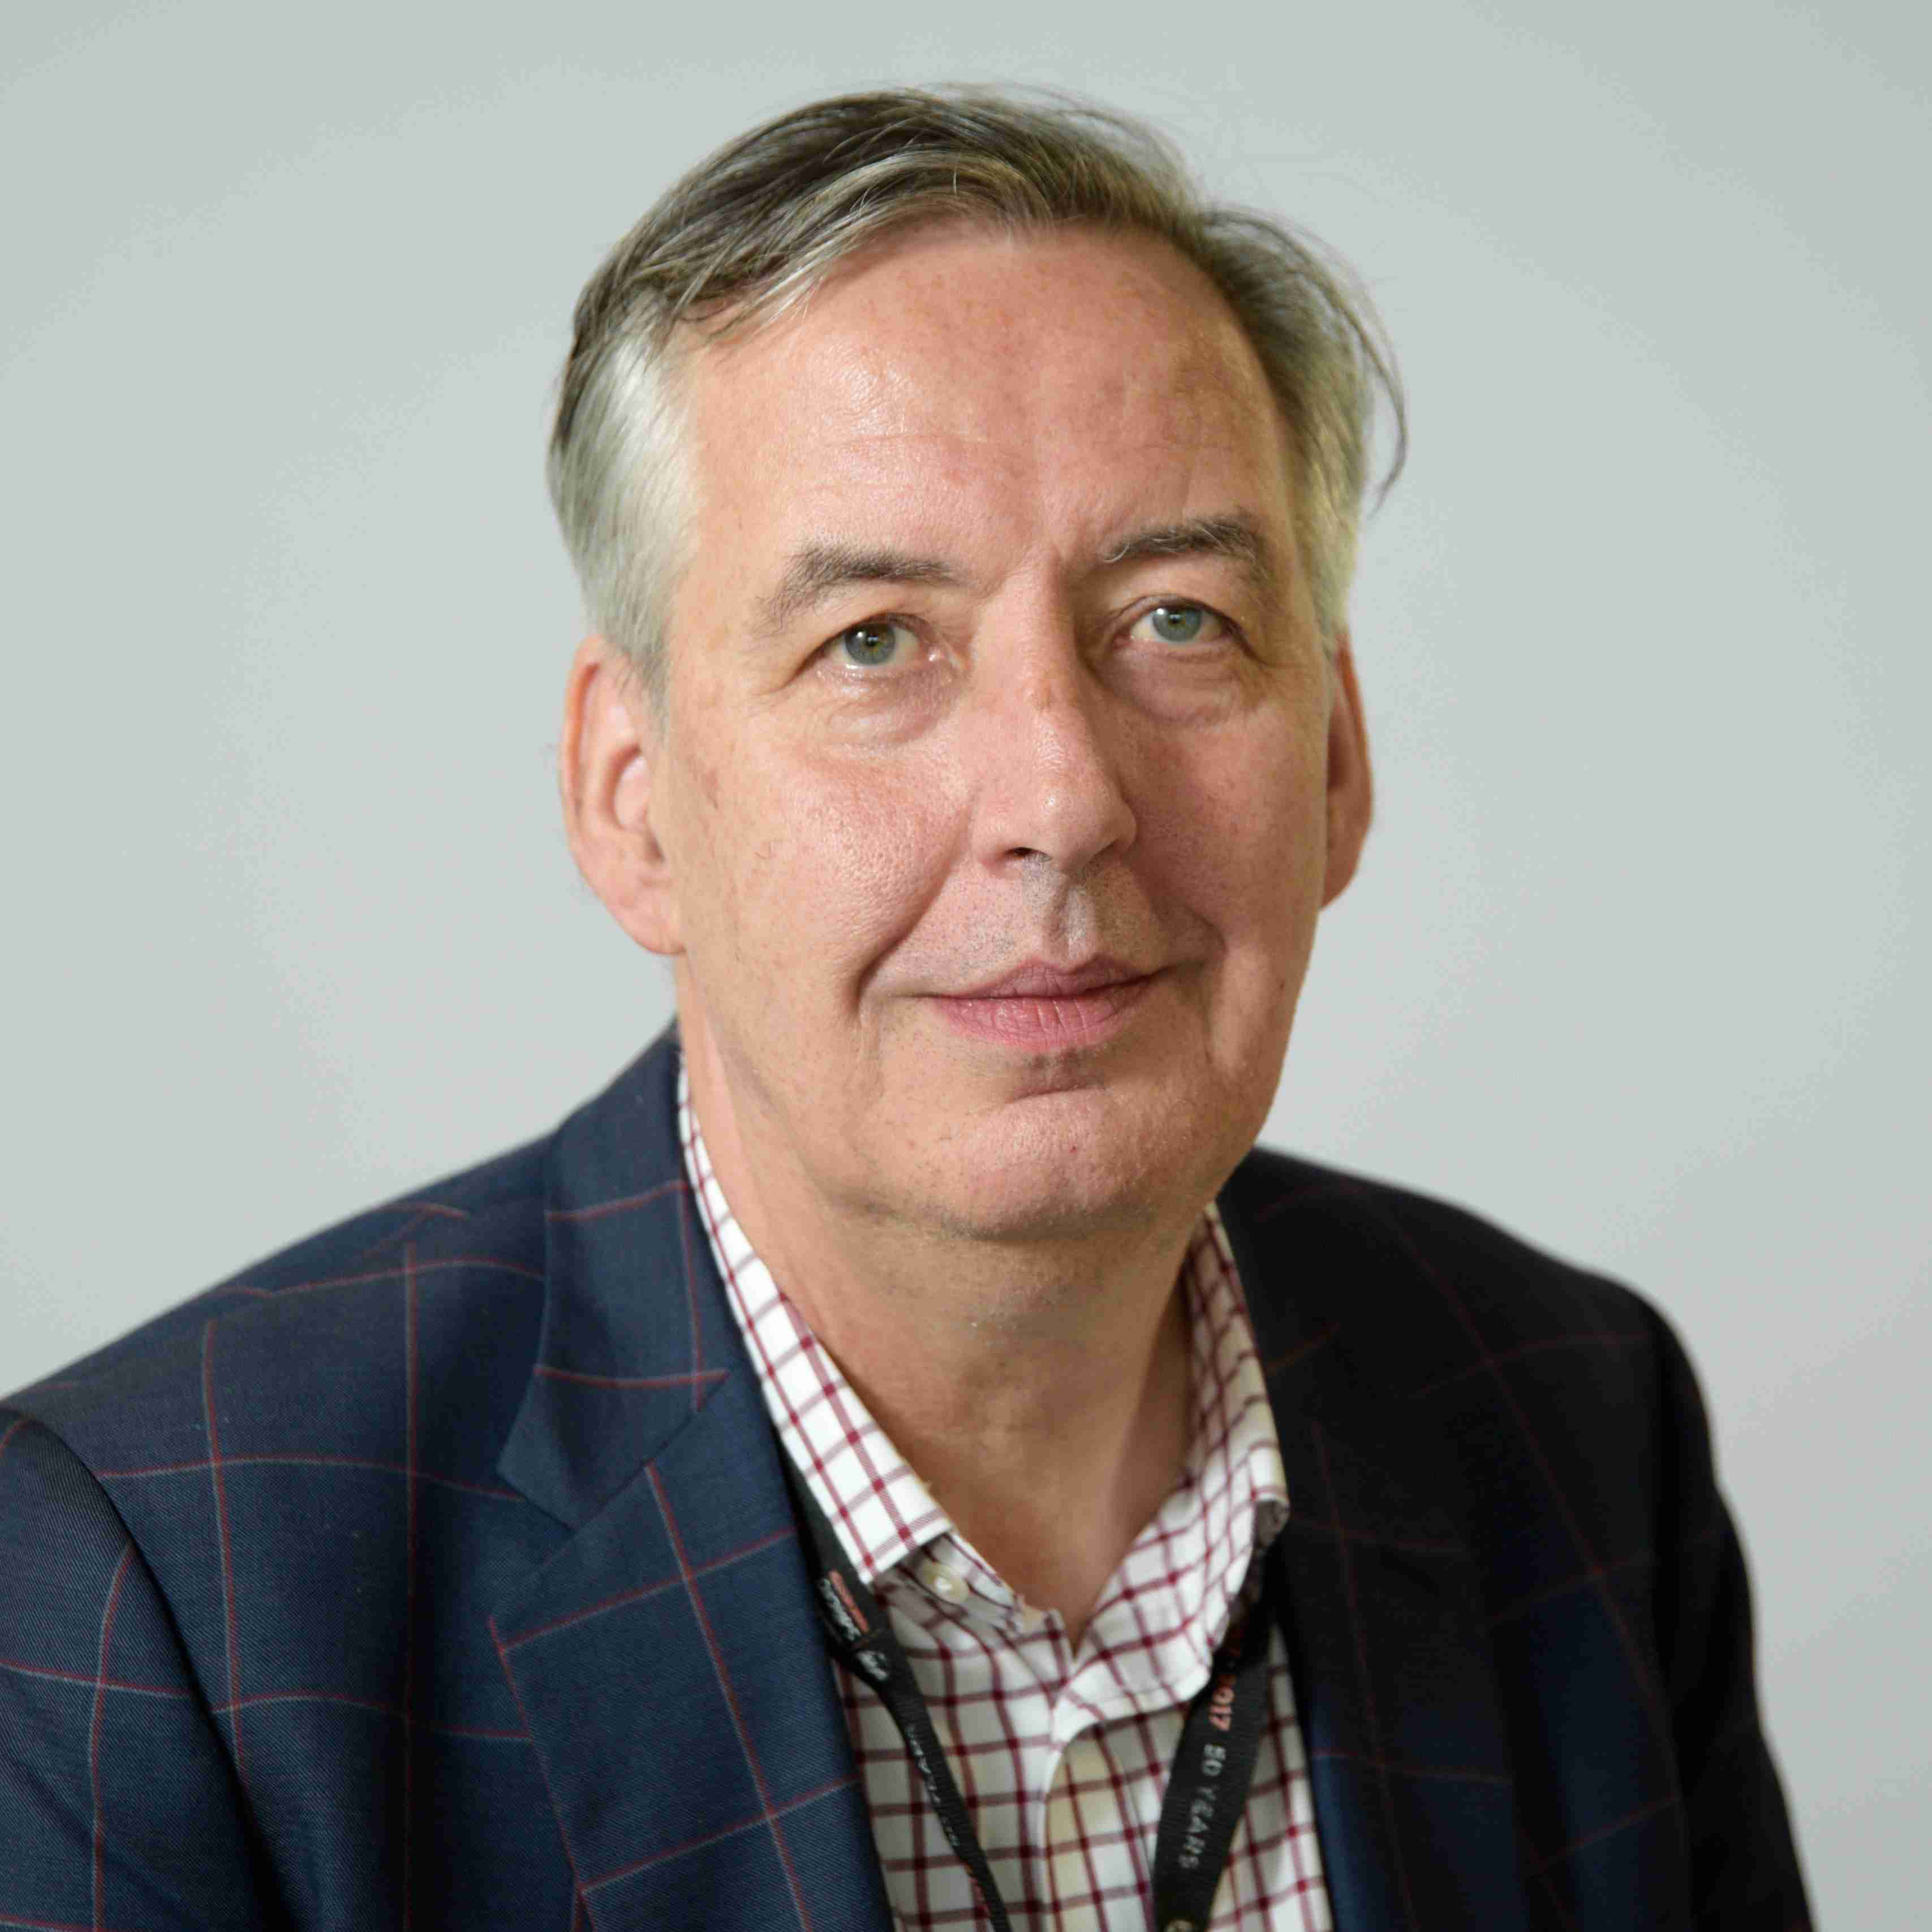 Profile image of Prof Peter McDermott